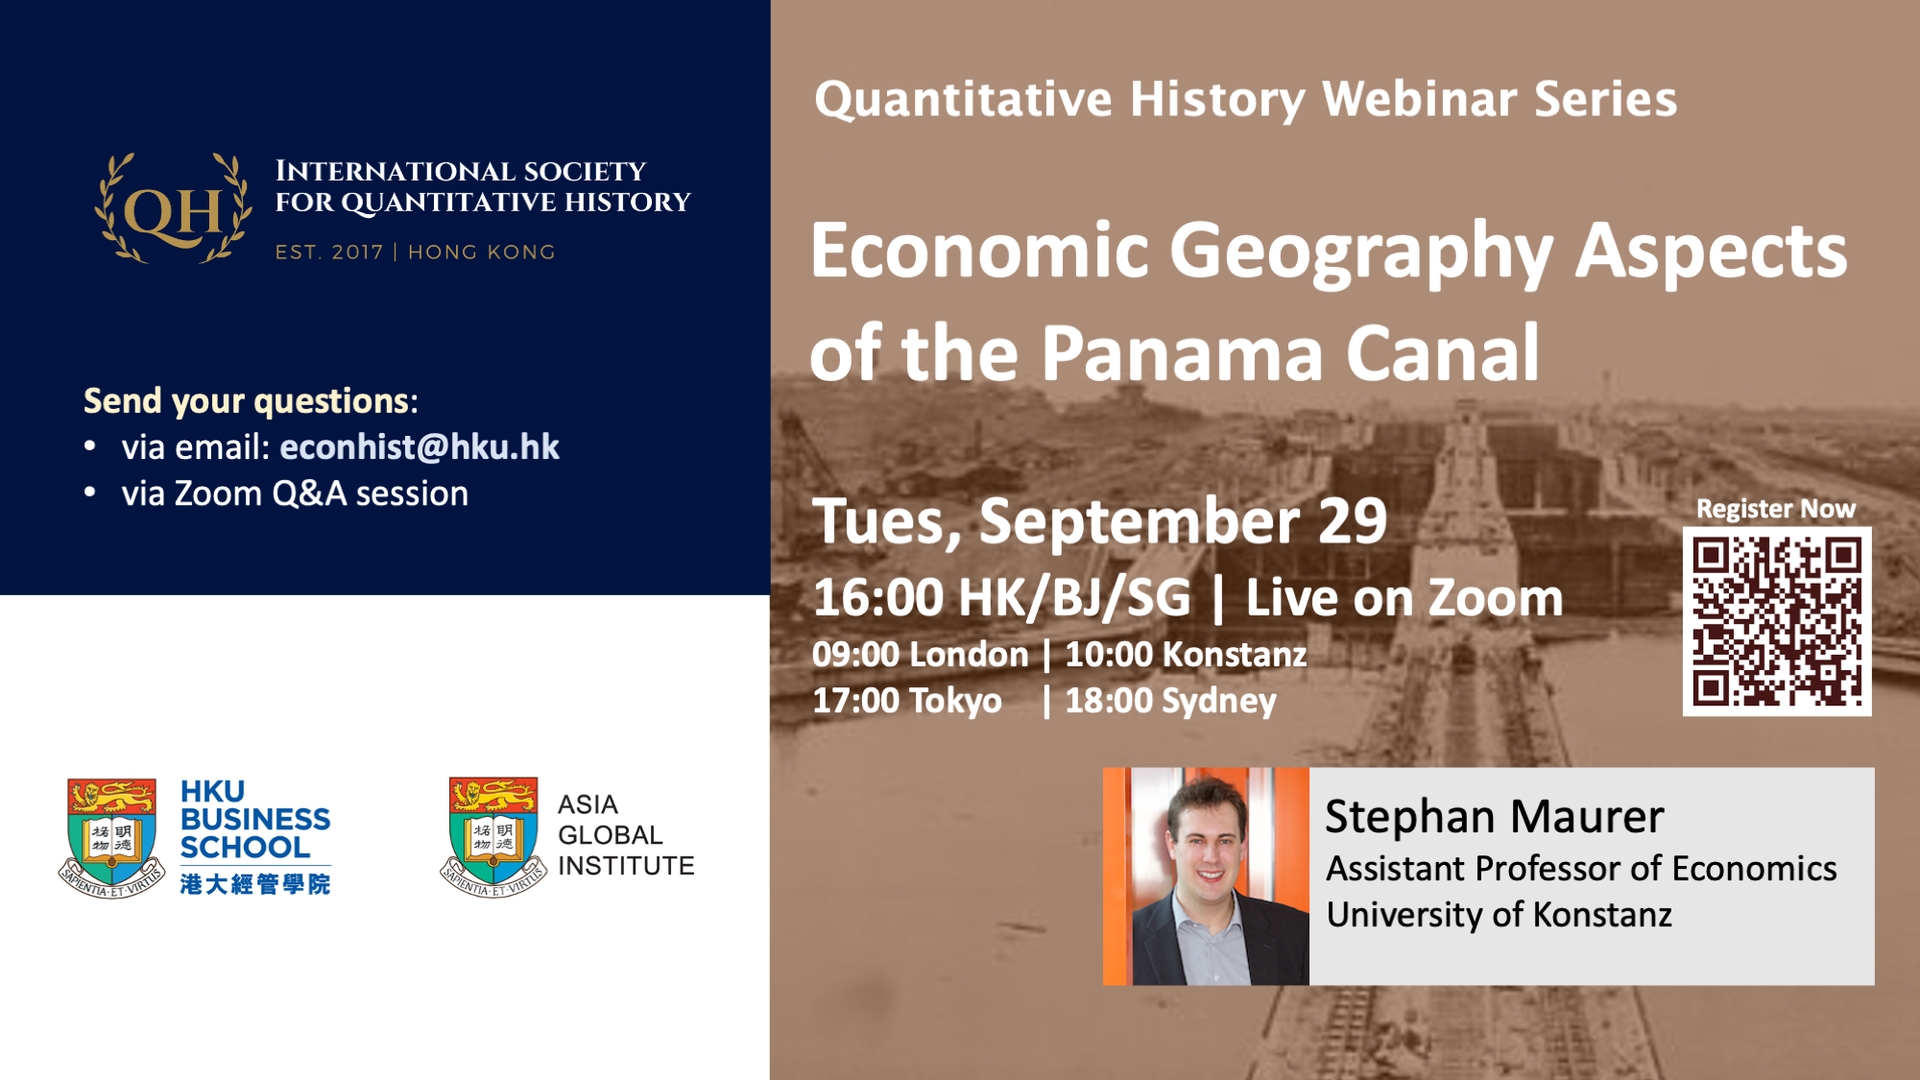 Quantitative History Webinar Series - Economic Geography Aspects of the Panama Canal [Stephan Maurer, University of Konstanz]